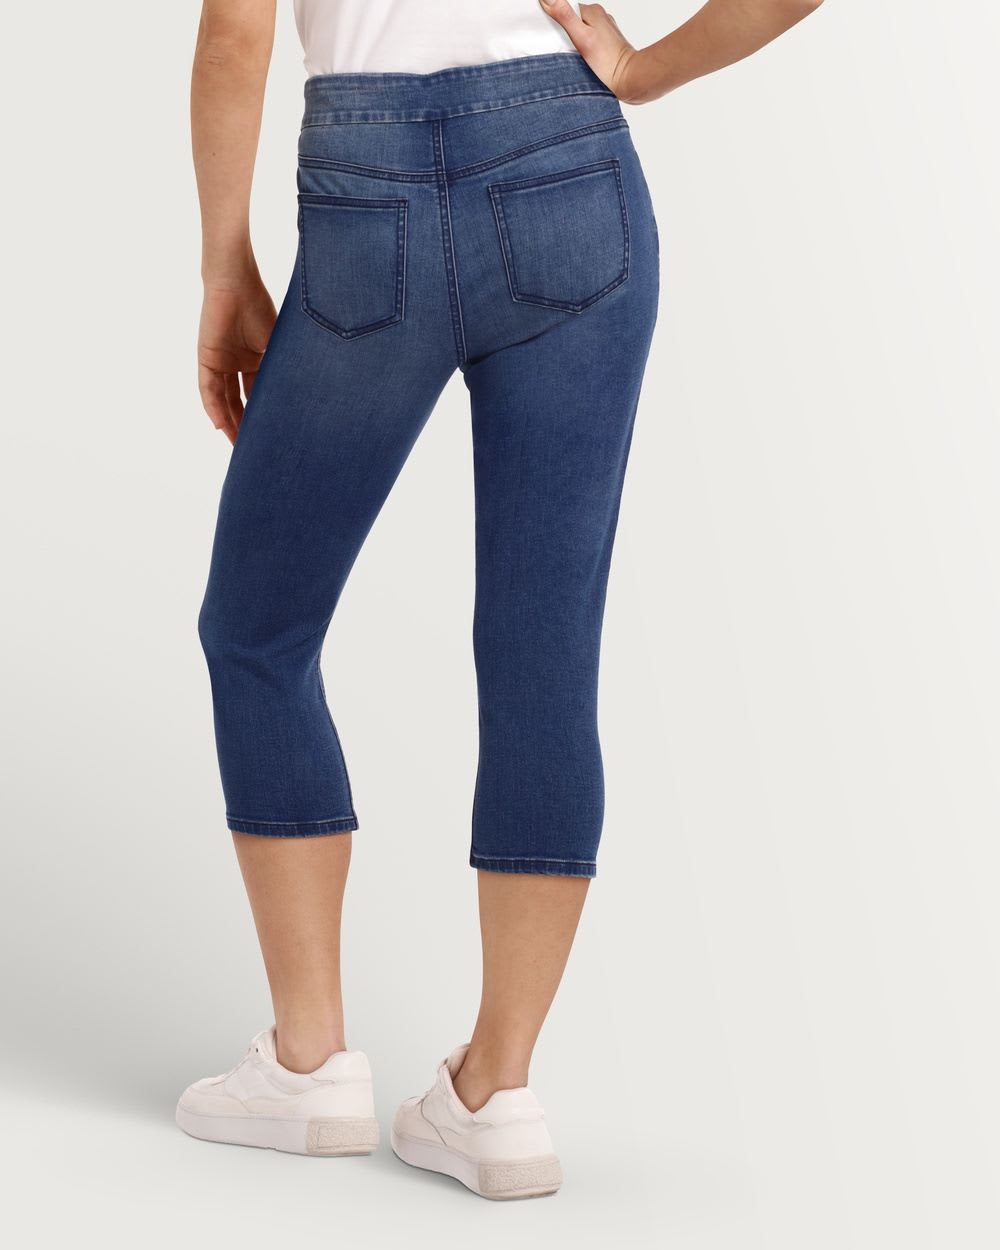 Medium Wash Mid Rise Skinny Leg Capri Jeans The Original Comfort